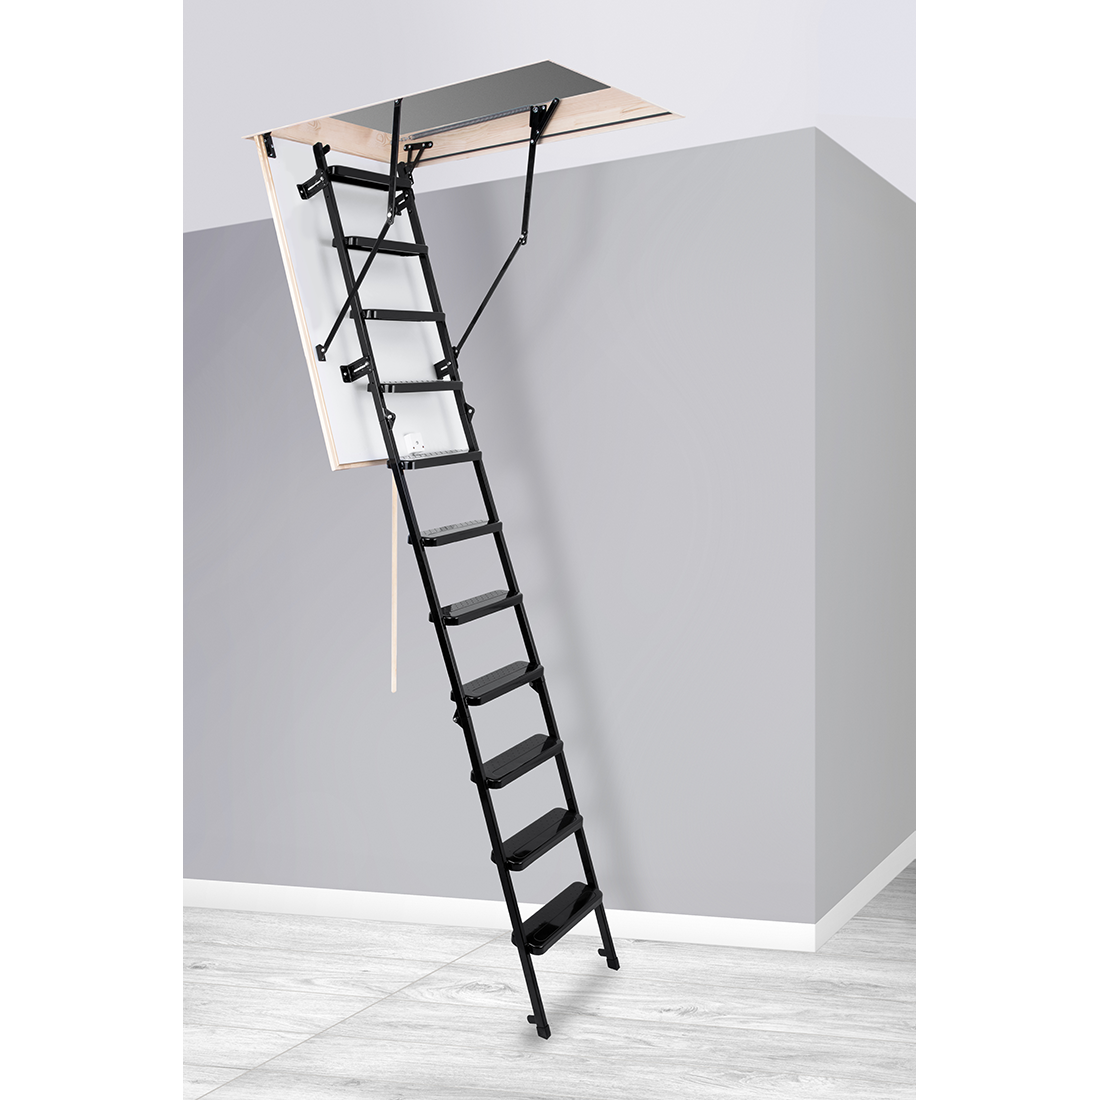 INTER Metal Attic Ladder 55" x 21.5"- Up to 9.18 feet